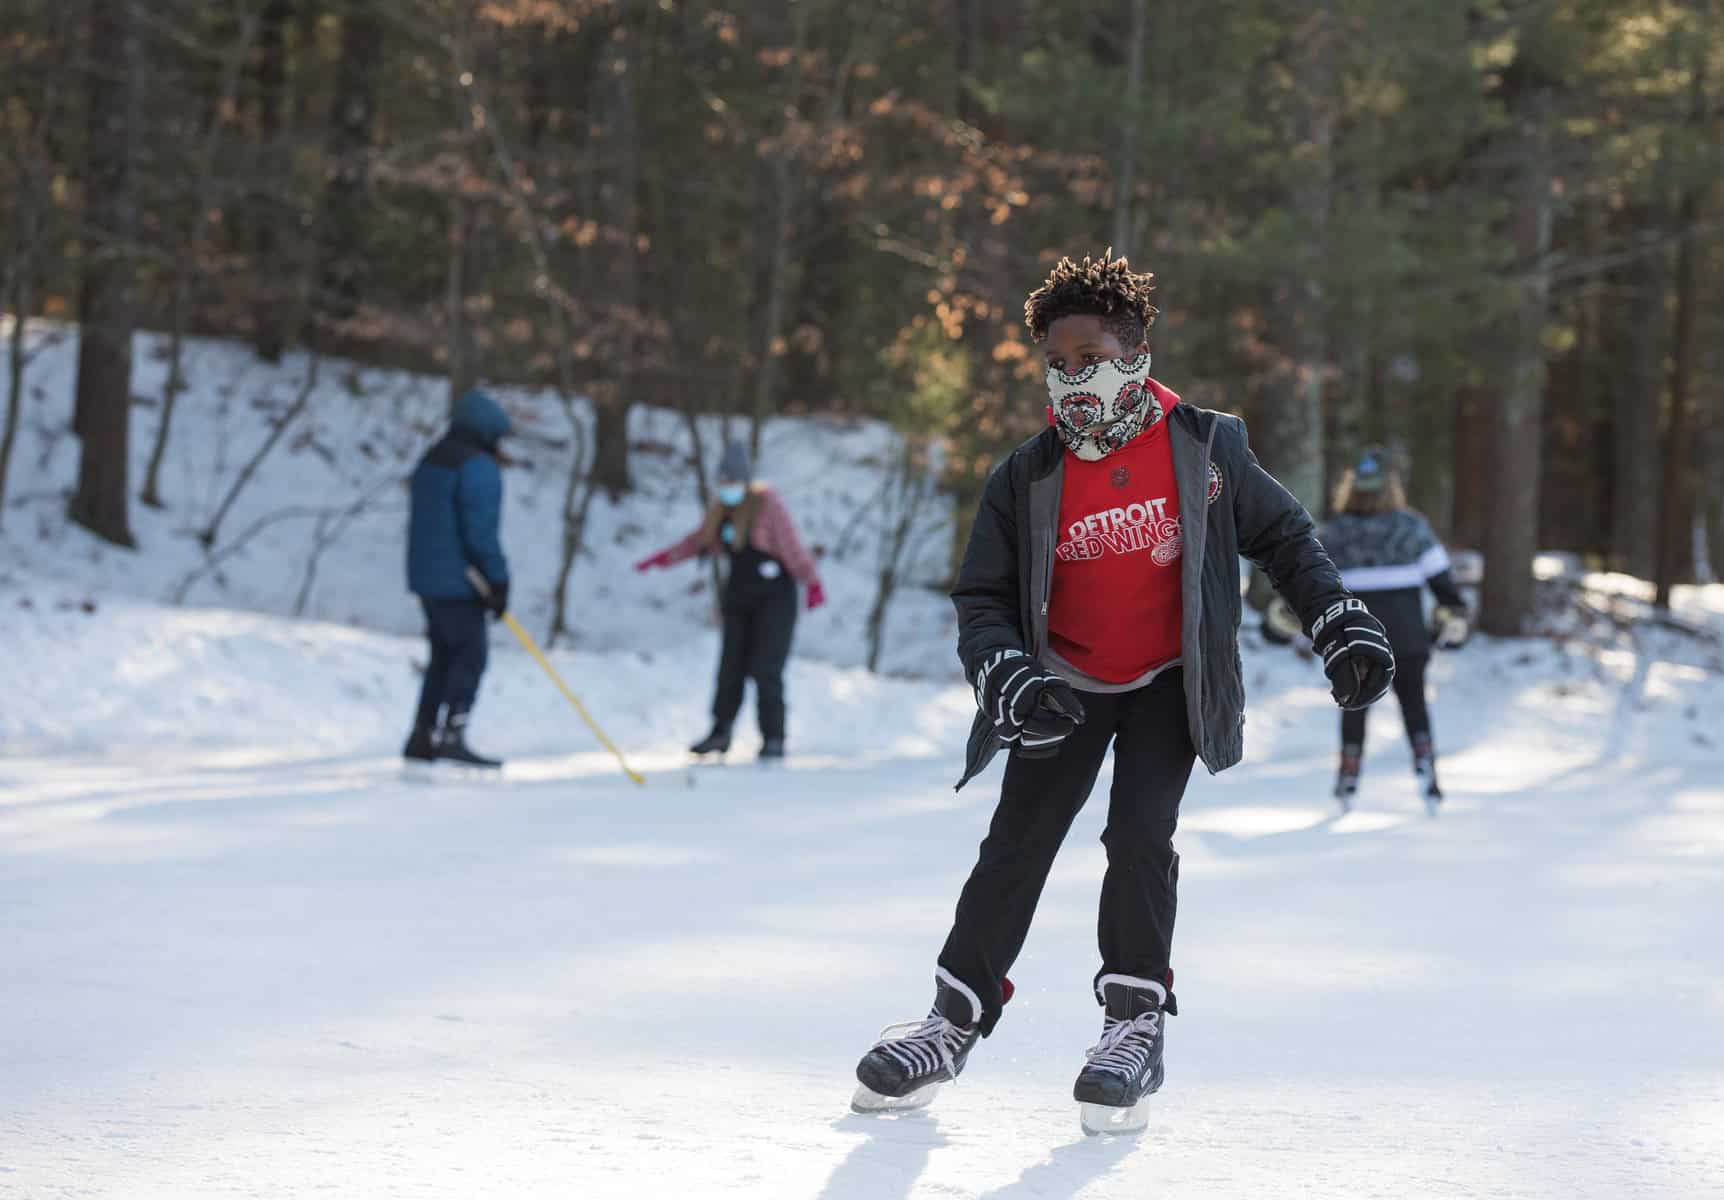 season pass includes ice skating